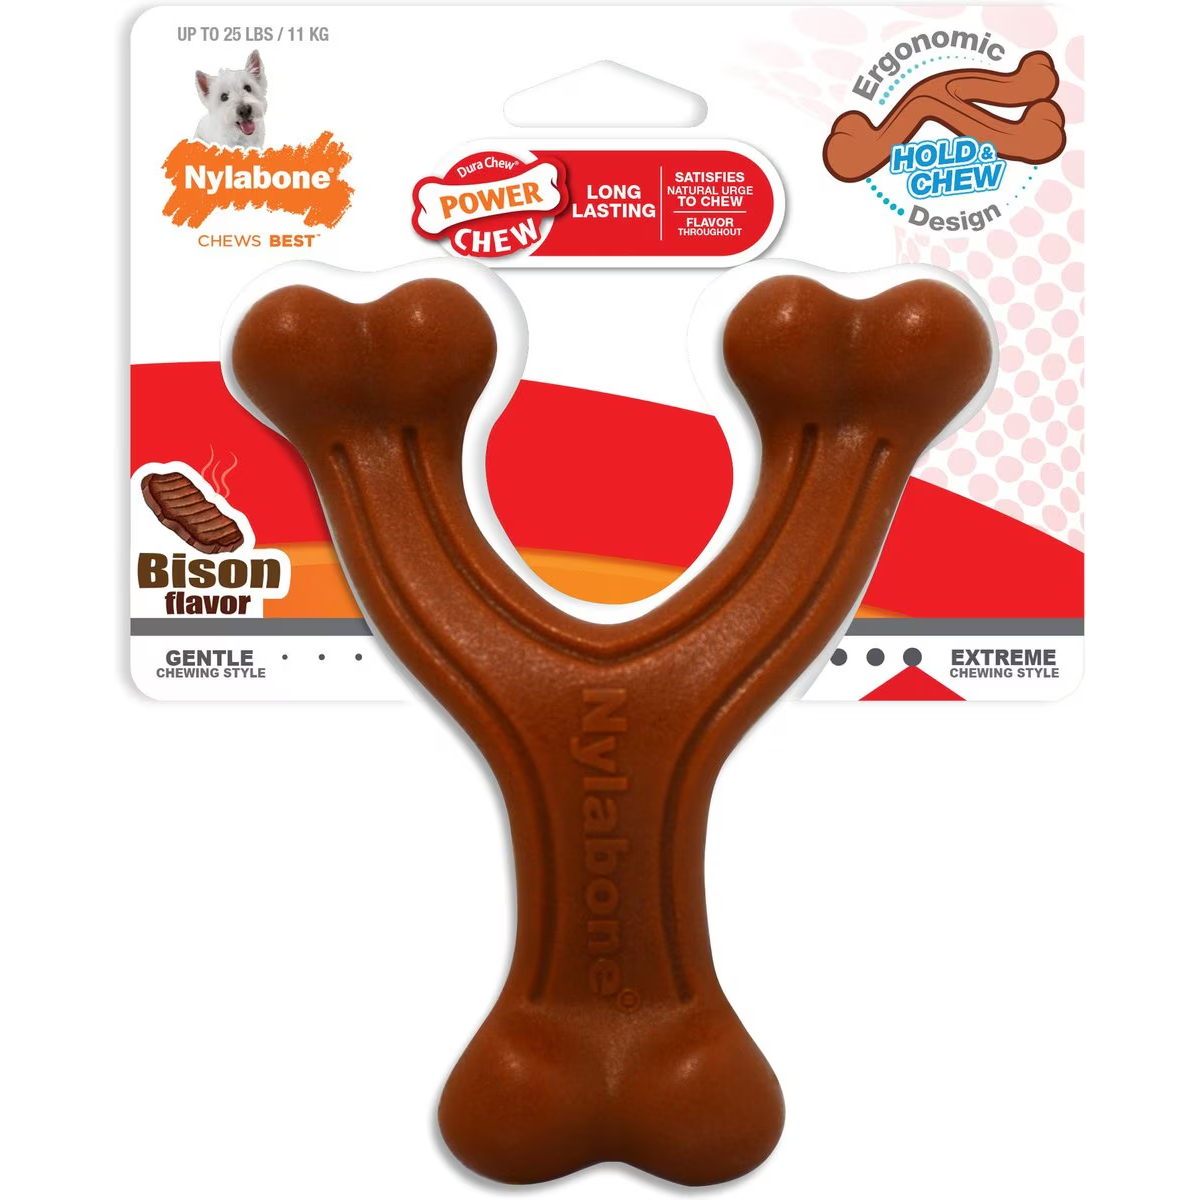 Nylabone Ergonomic Hold & Chew Wishbone Power Chew Durable Dog Toy 